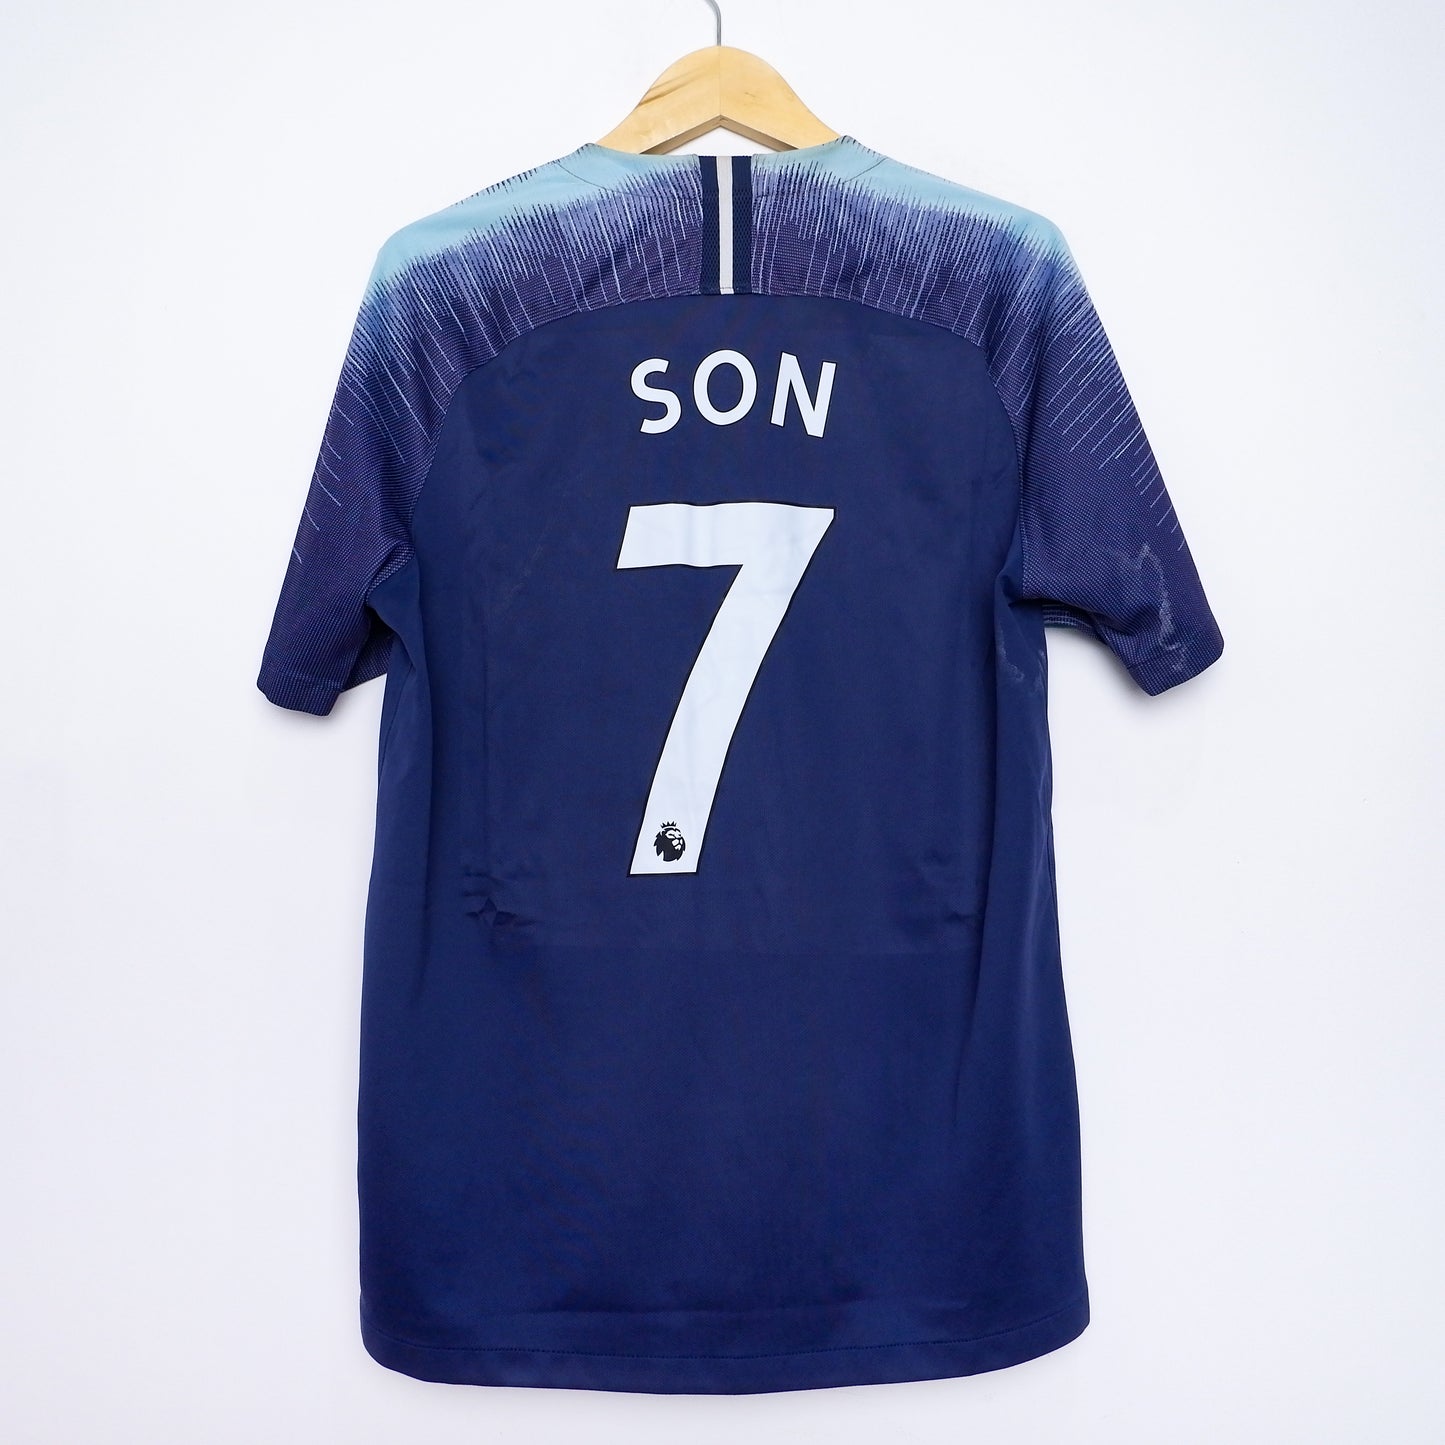 Authentic Tottenham Hotspur 2018/19 Away - Son Heung-min #7 Size L